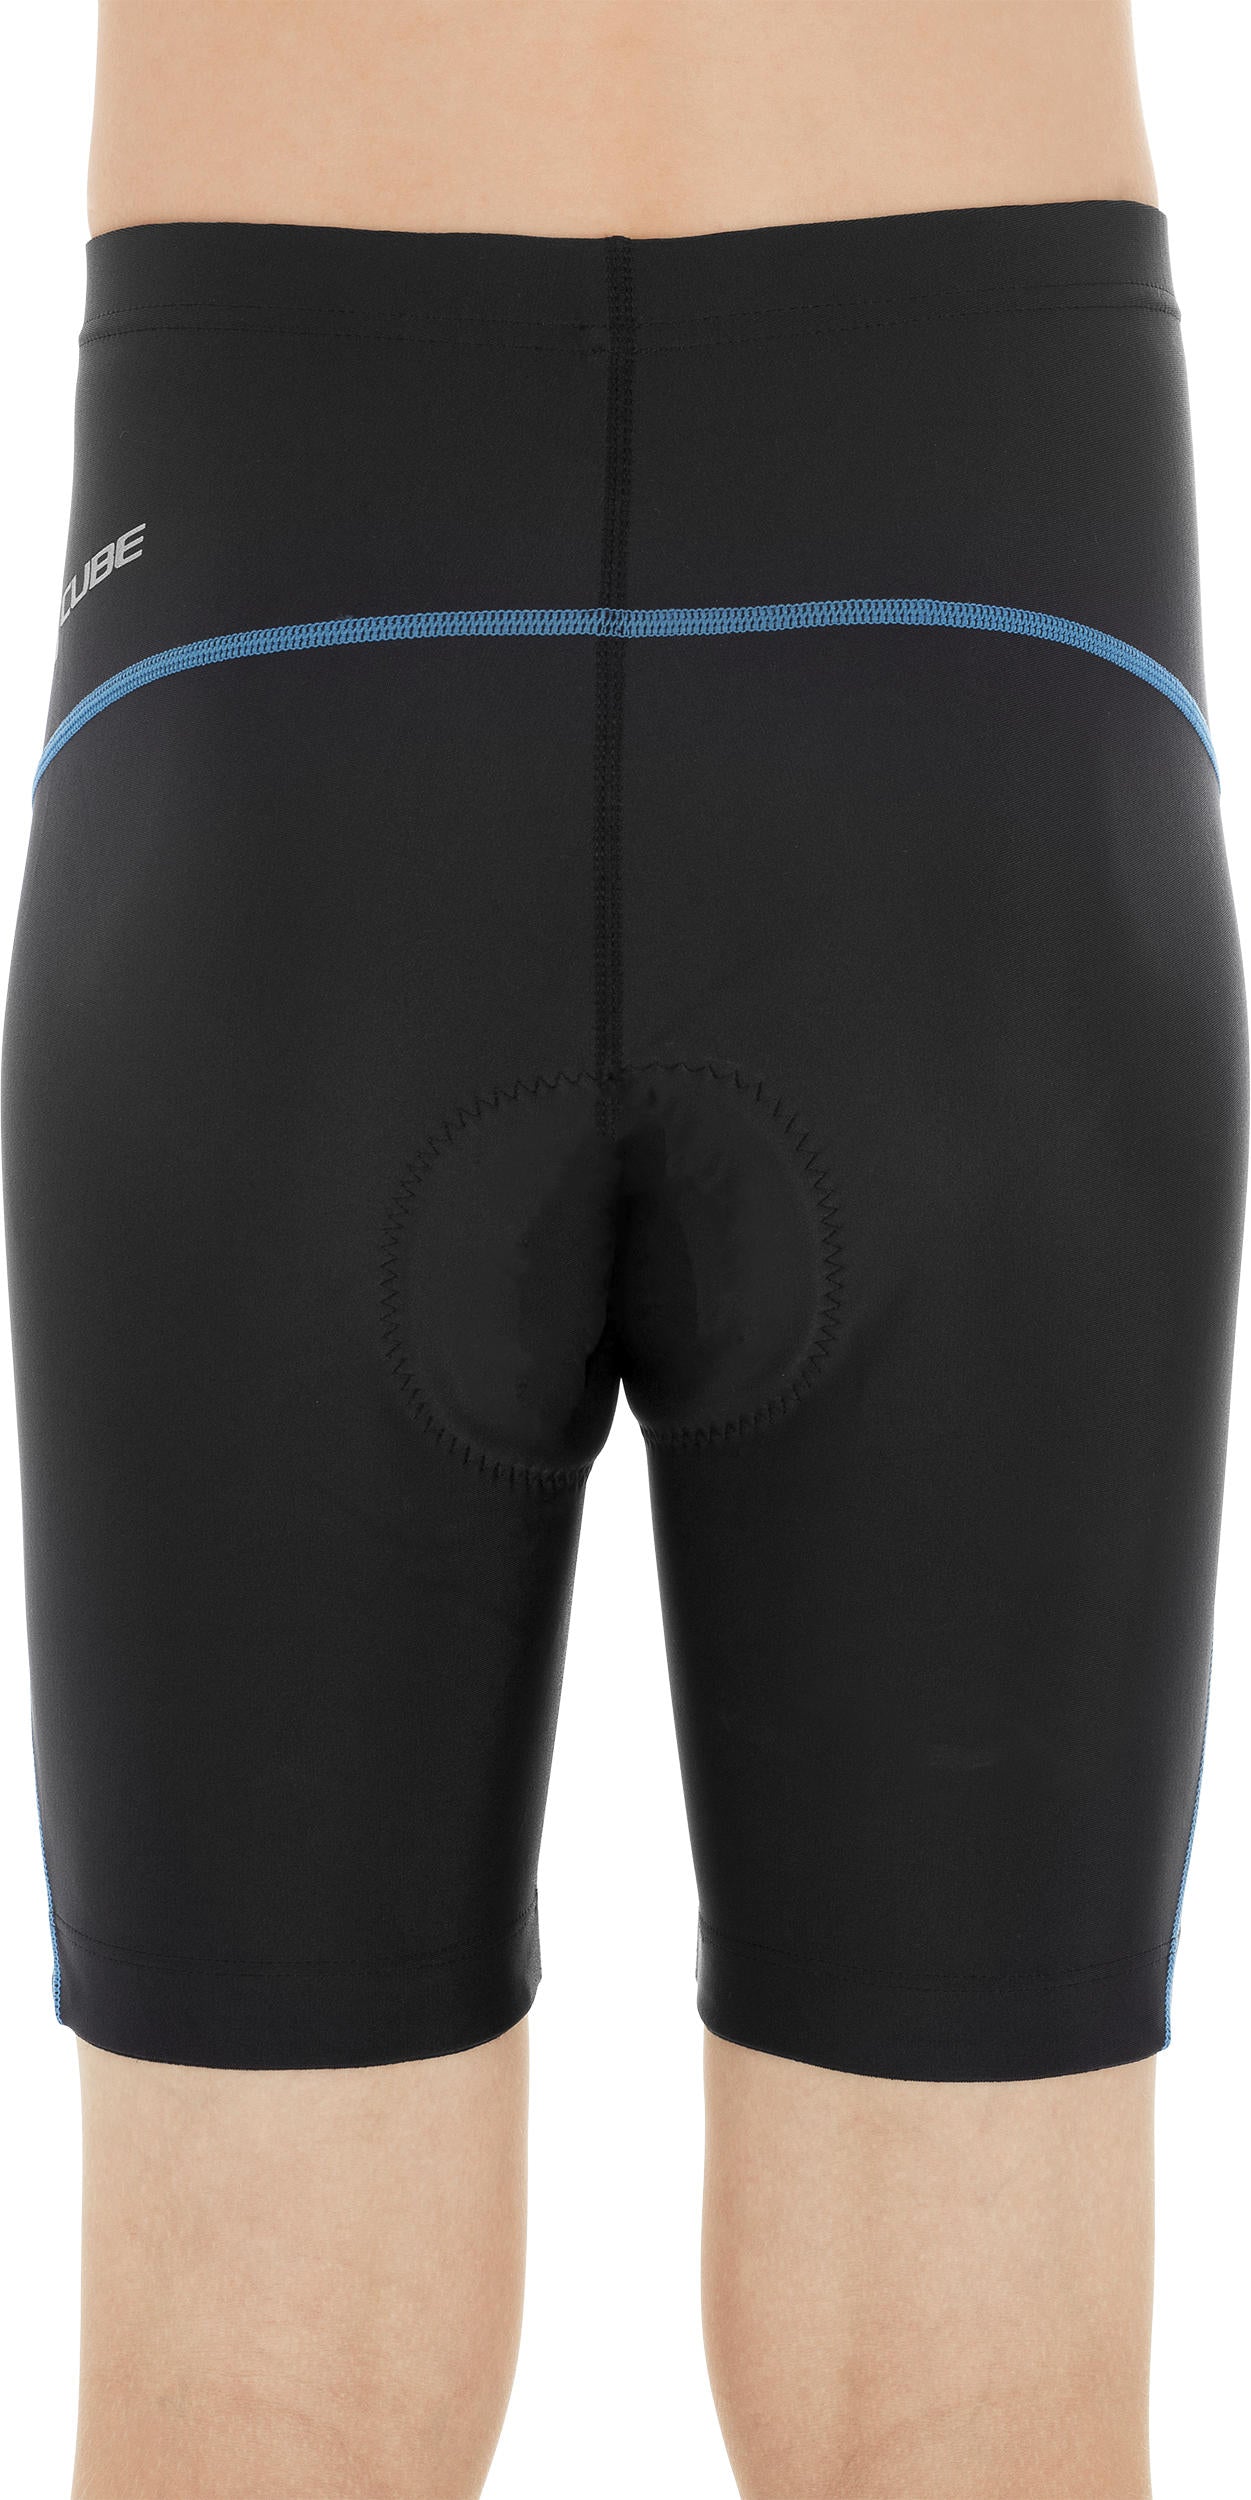 Junior Cycle Shorts Black/Blue